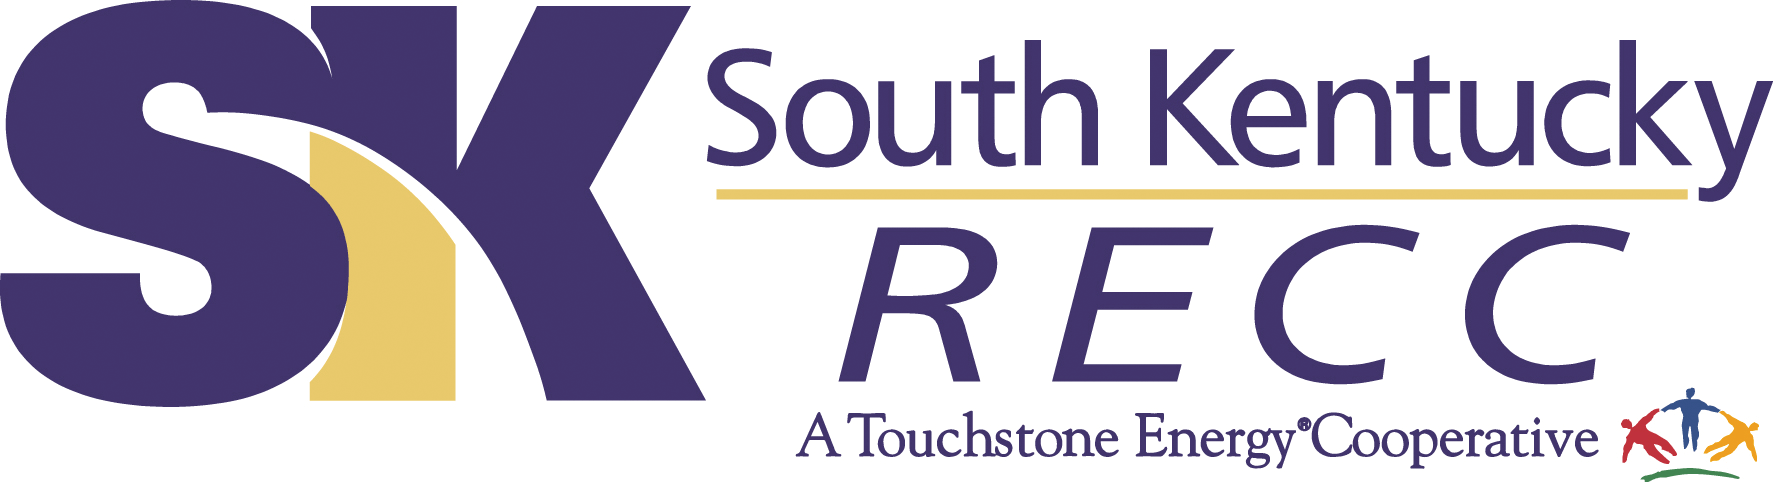 South Kentucky Rural Electric Cooperative Corporation logo